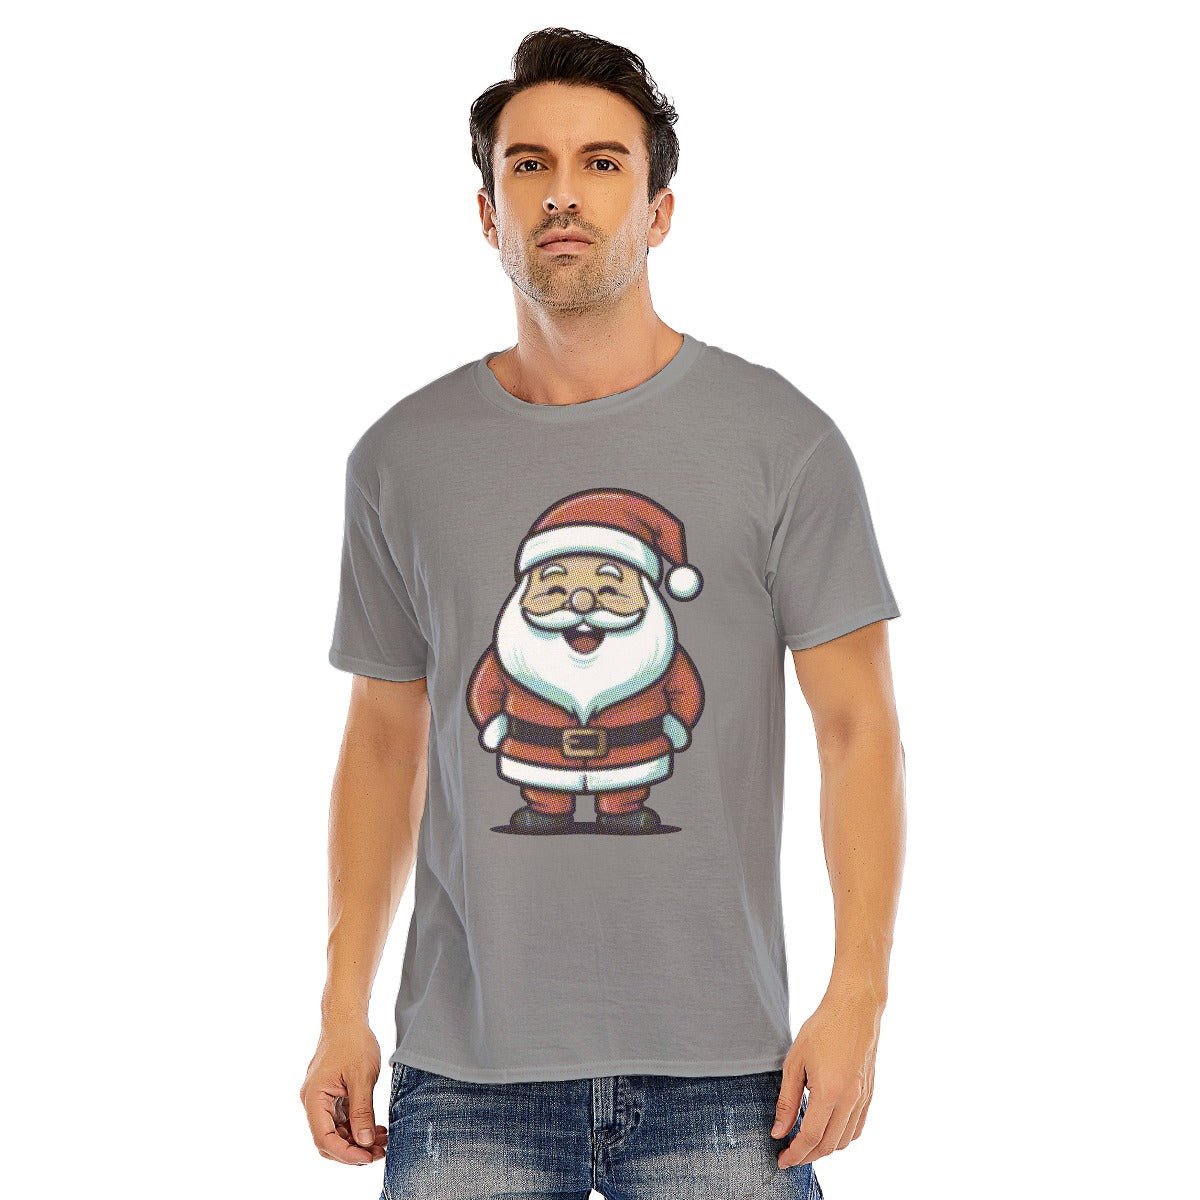 Mens Short Sleeve Christmas Tee - Halftone Santa - Festive Style